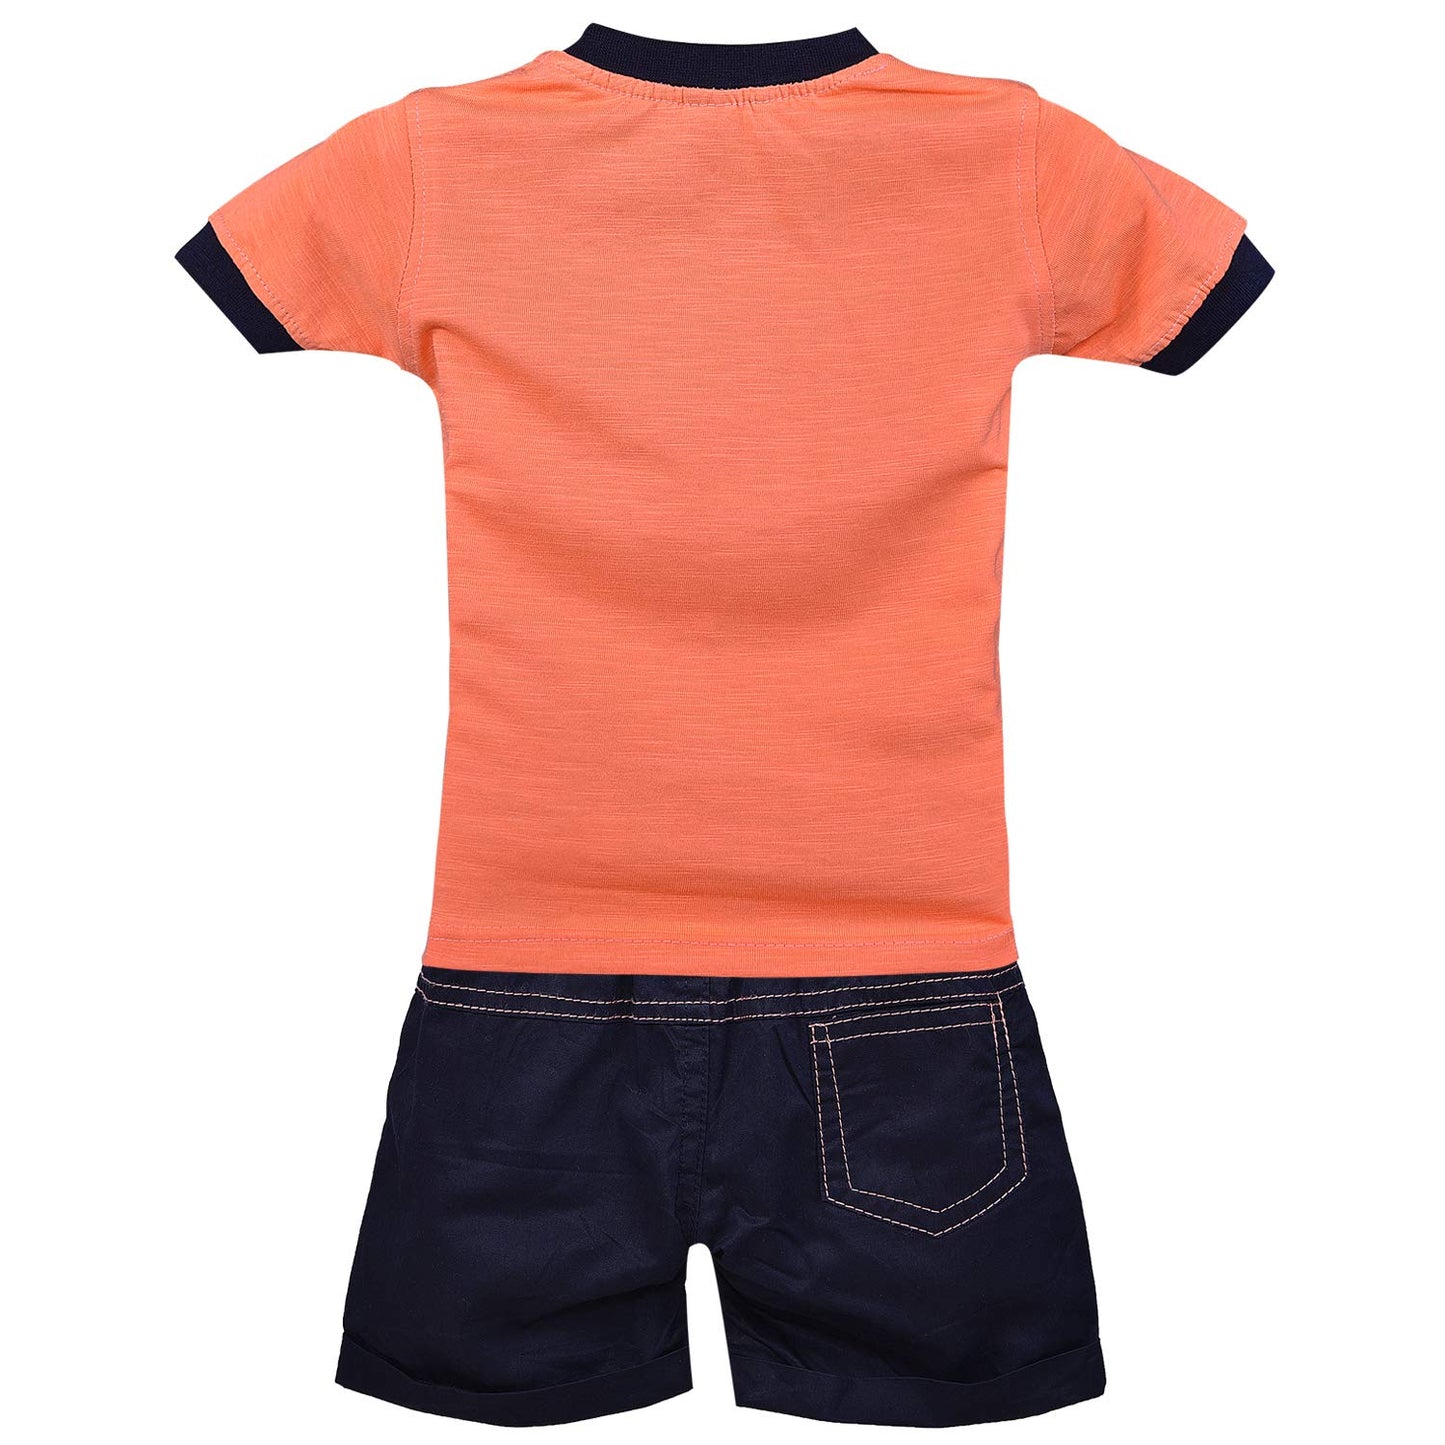 Wish Karo Unisex Clothing Sets for Baby Girls - Boys-(bt27org)